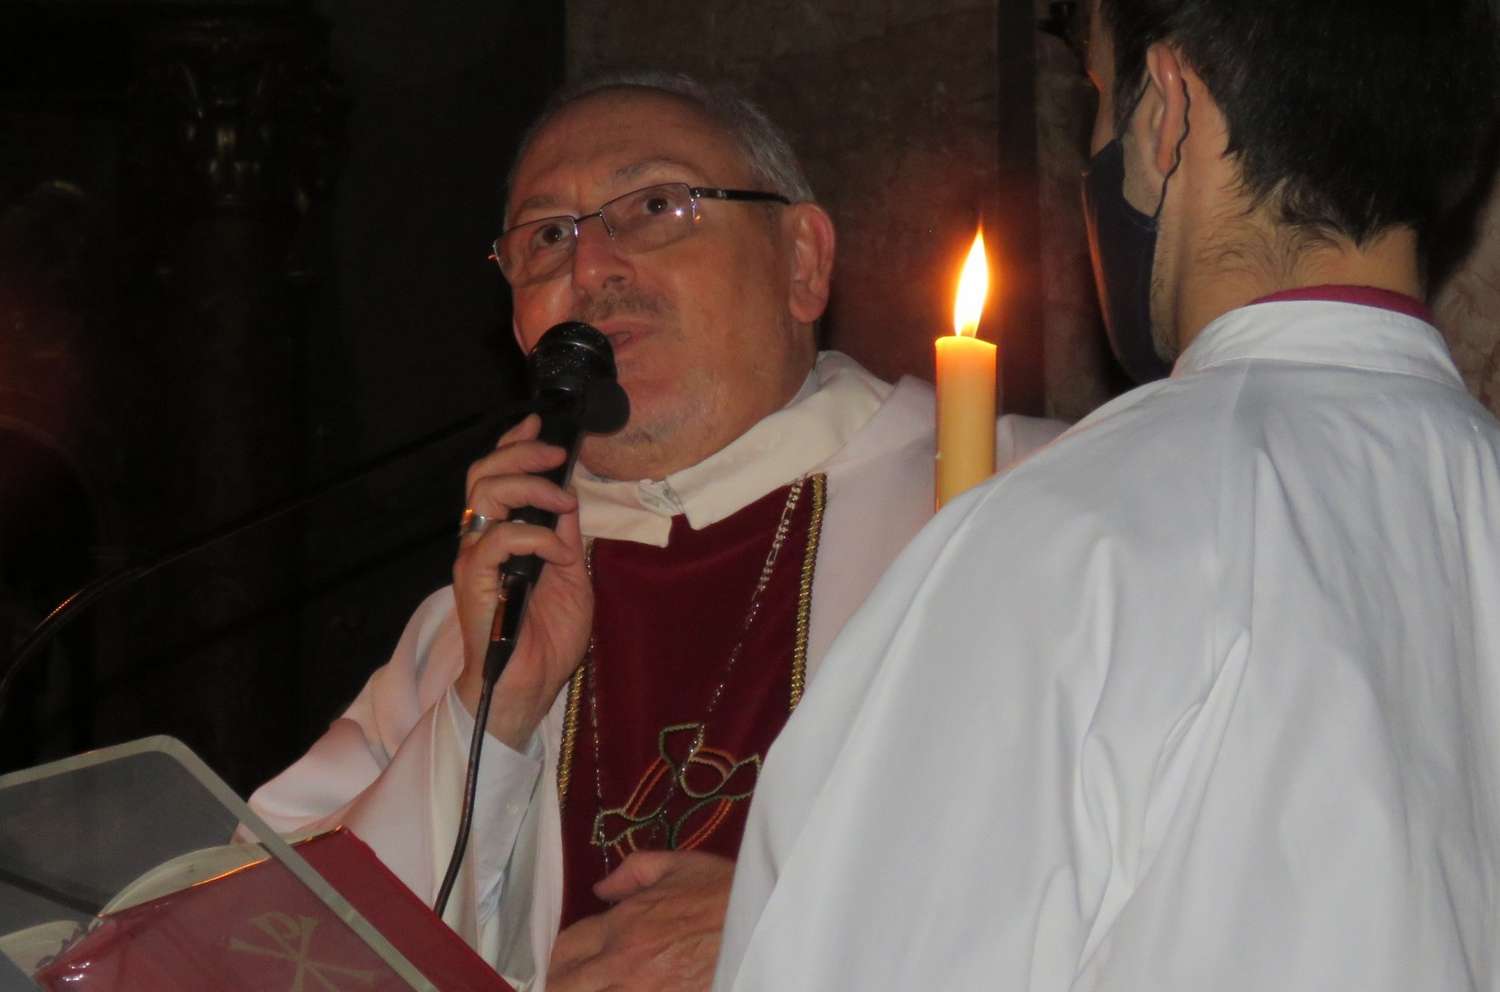 Zordán reclamó un Iglesia con rostro sinodal